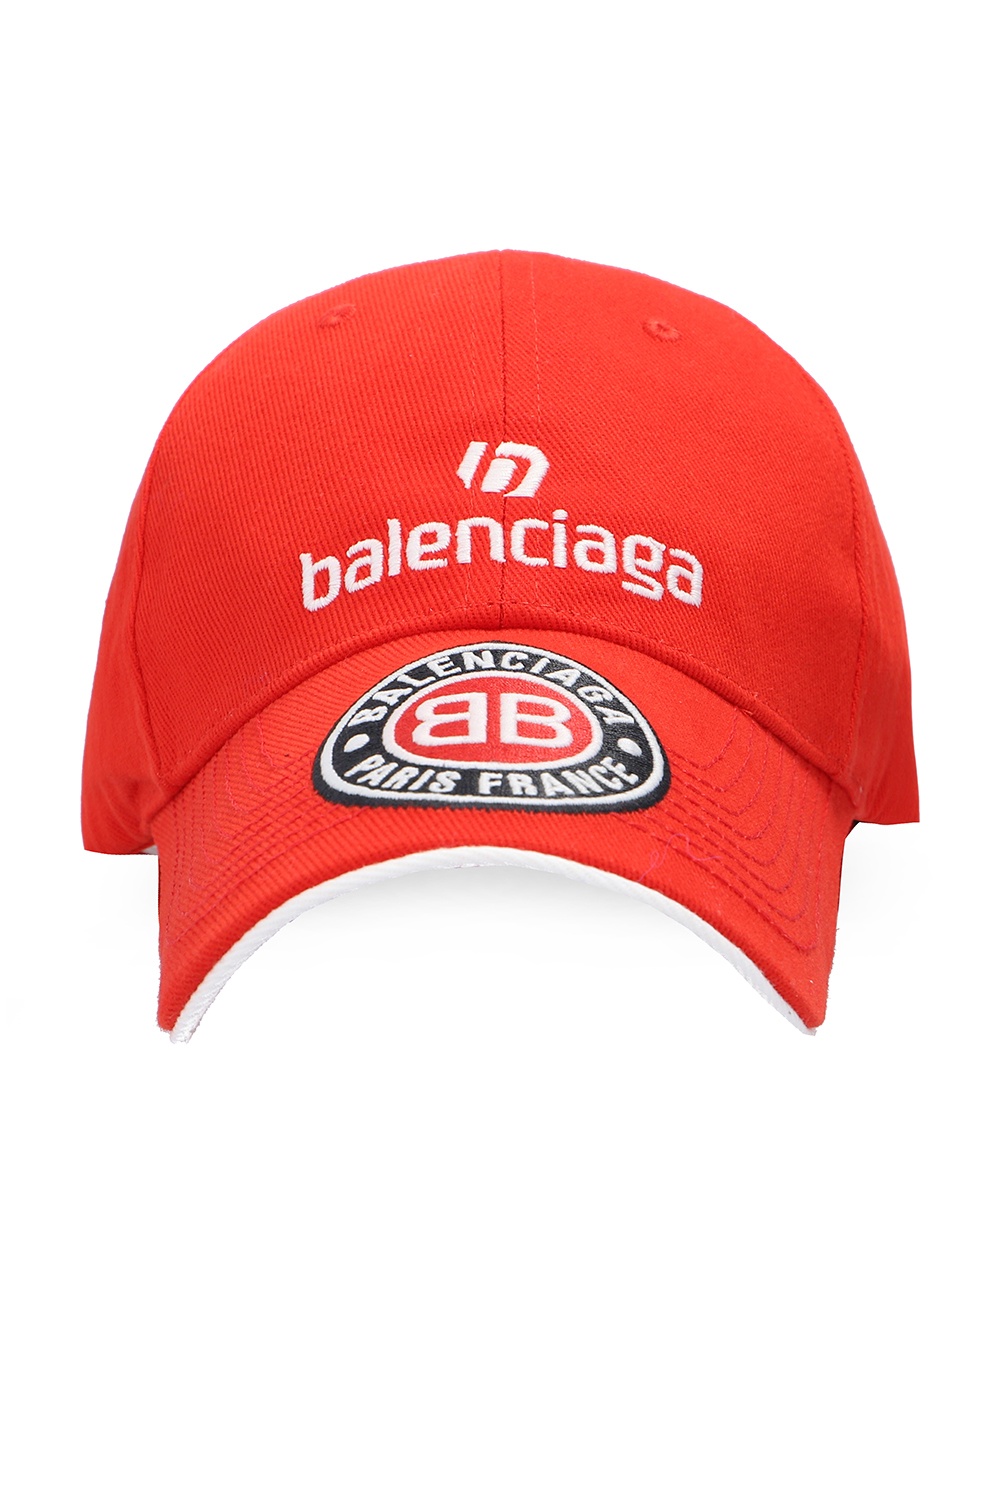 Balenciaga Baseball Hat  StockRoom